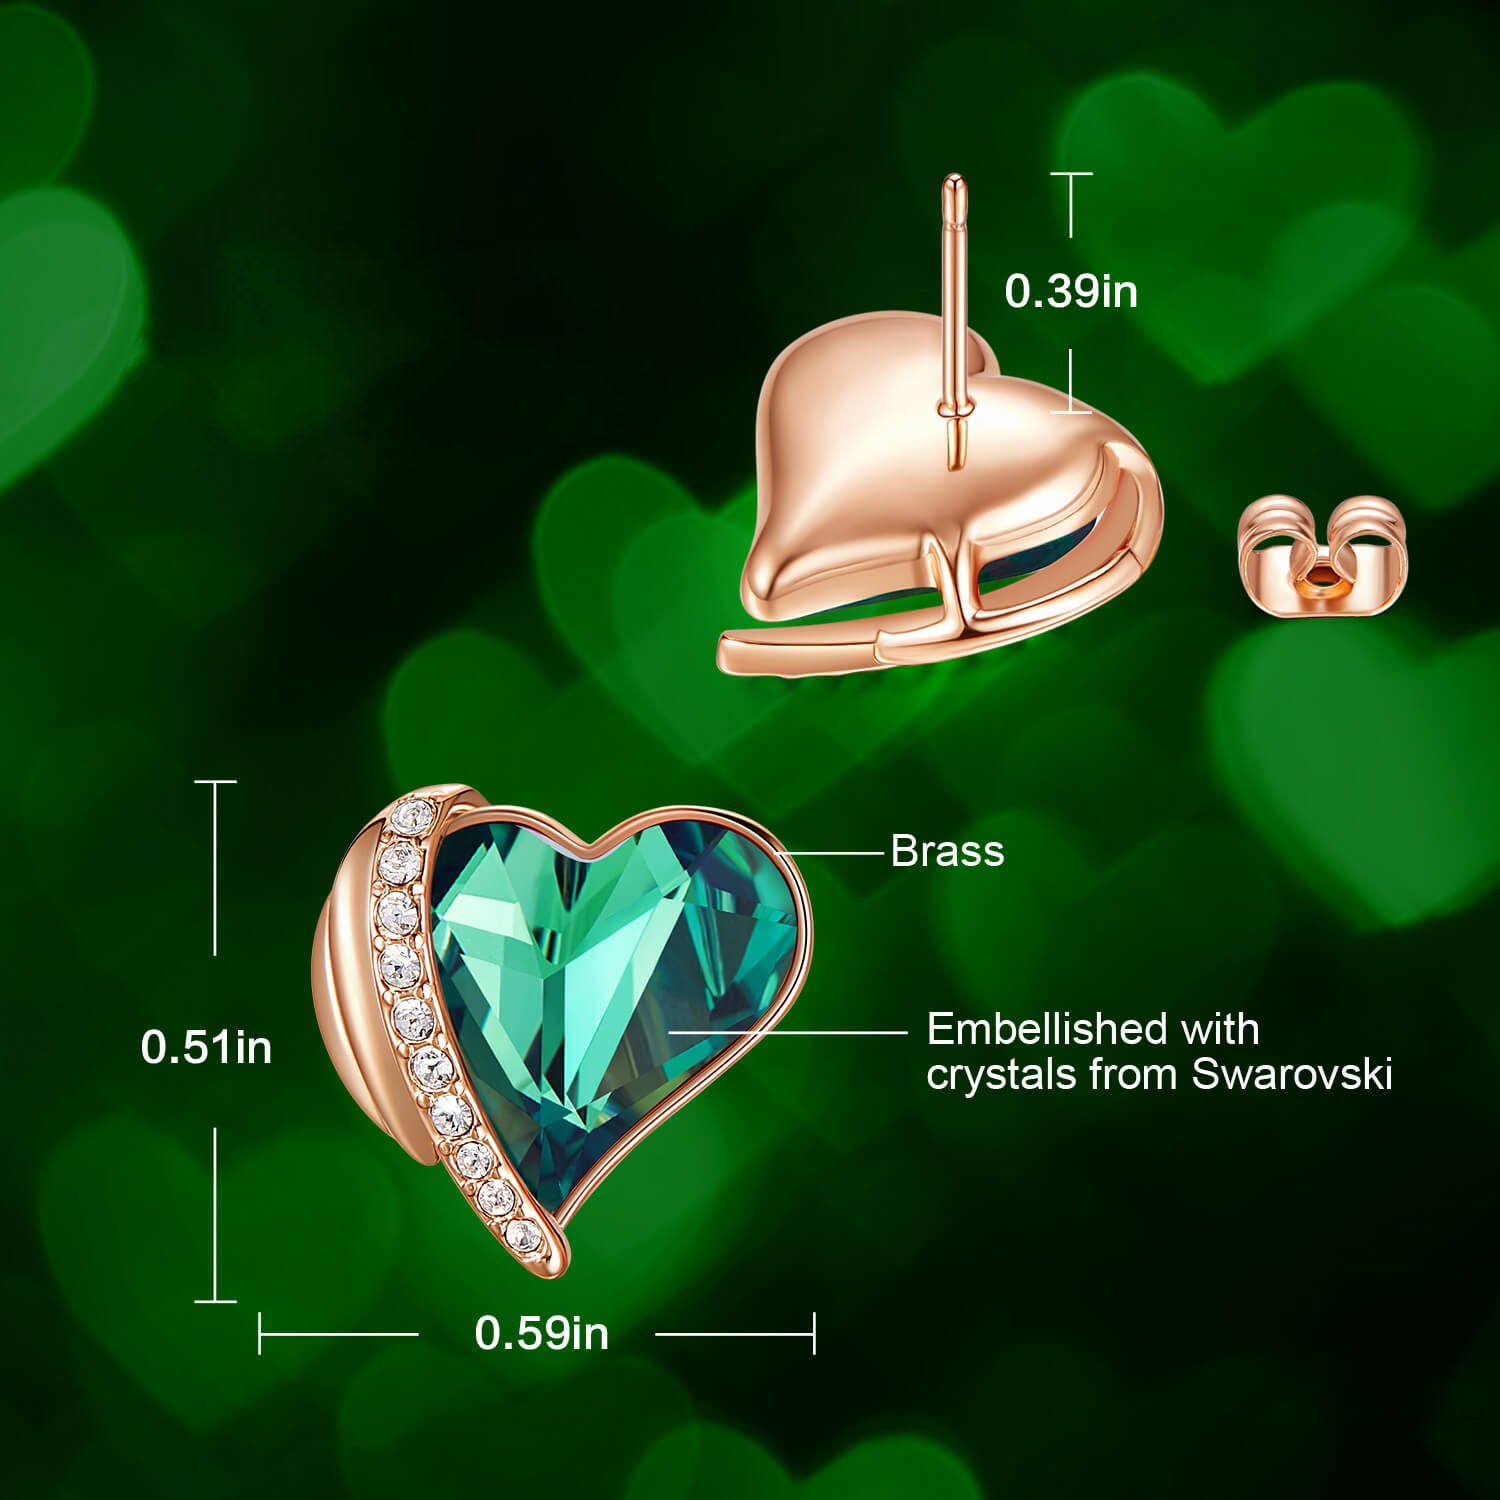 Green & Rose Gold Angel Heart Earrings